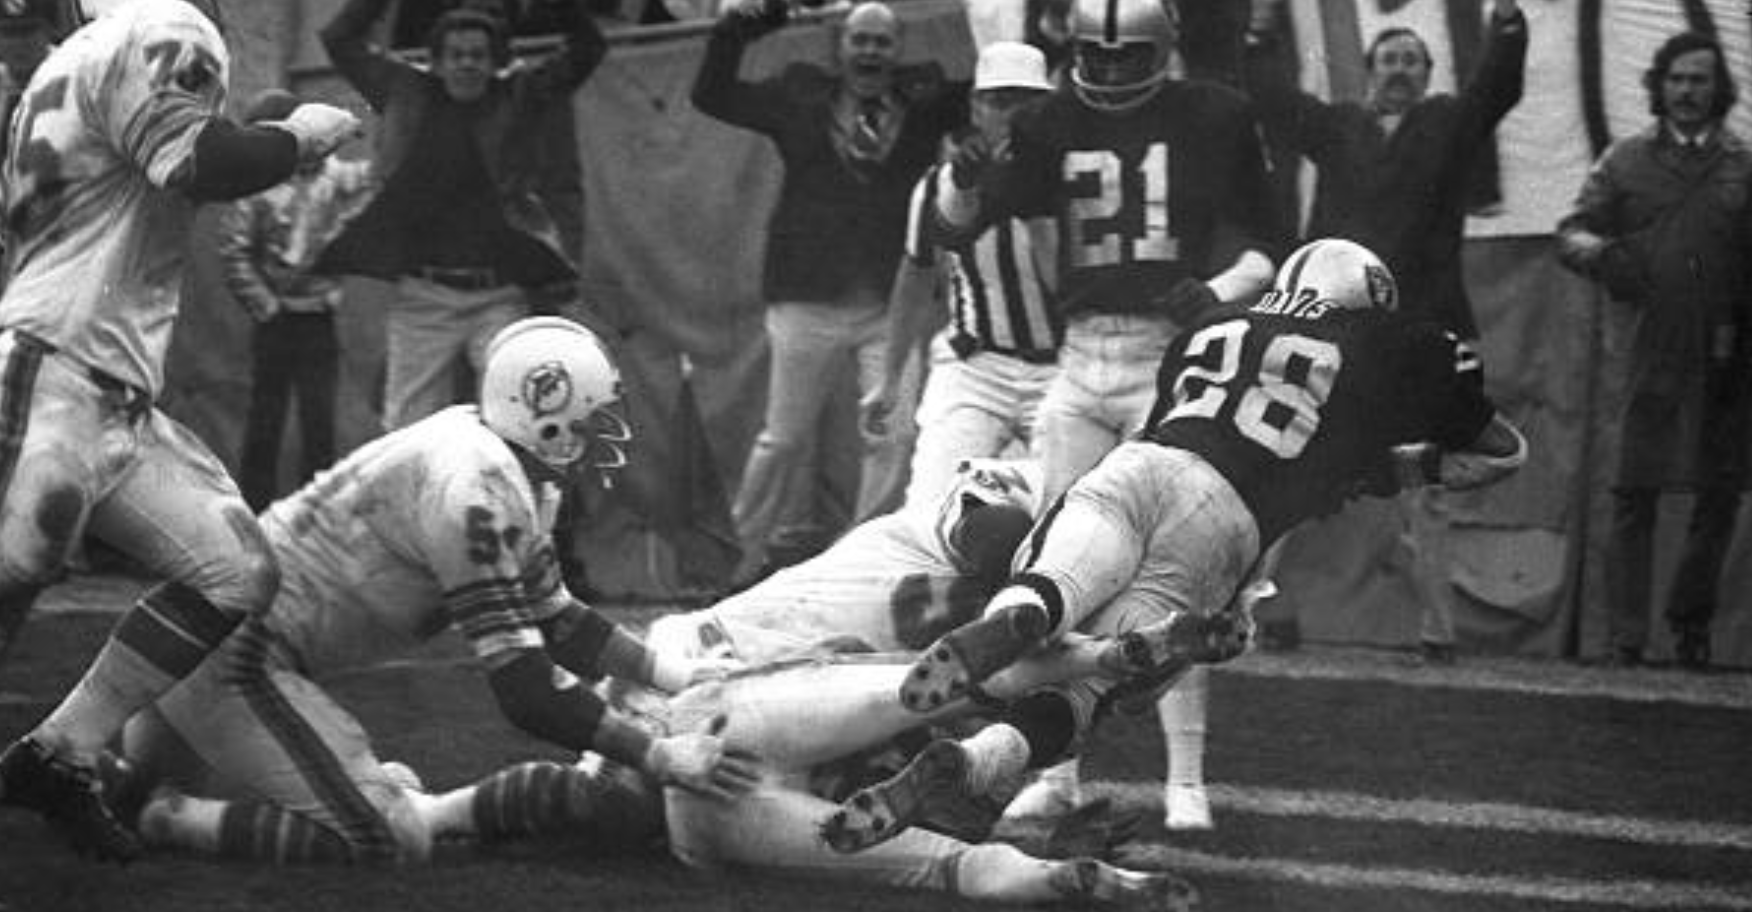 Touchdown Oakland Raiders vs Miami Dolphins 1974